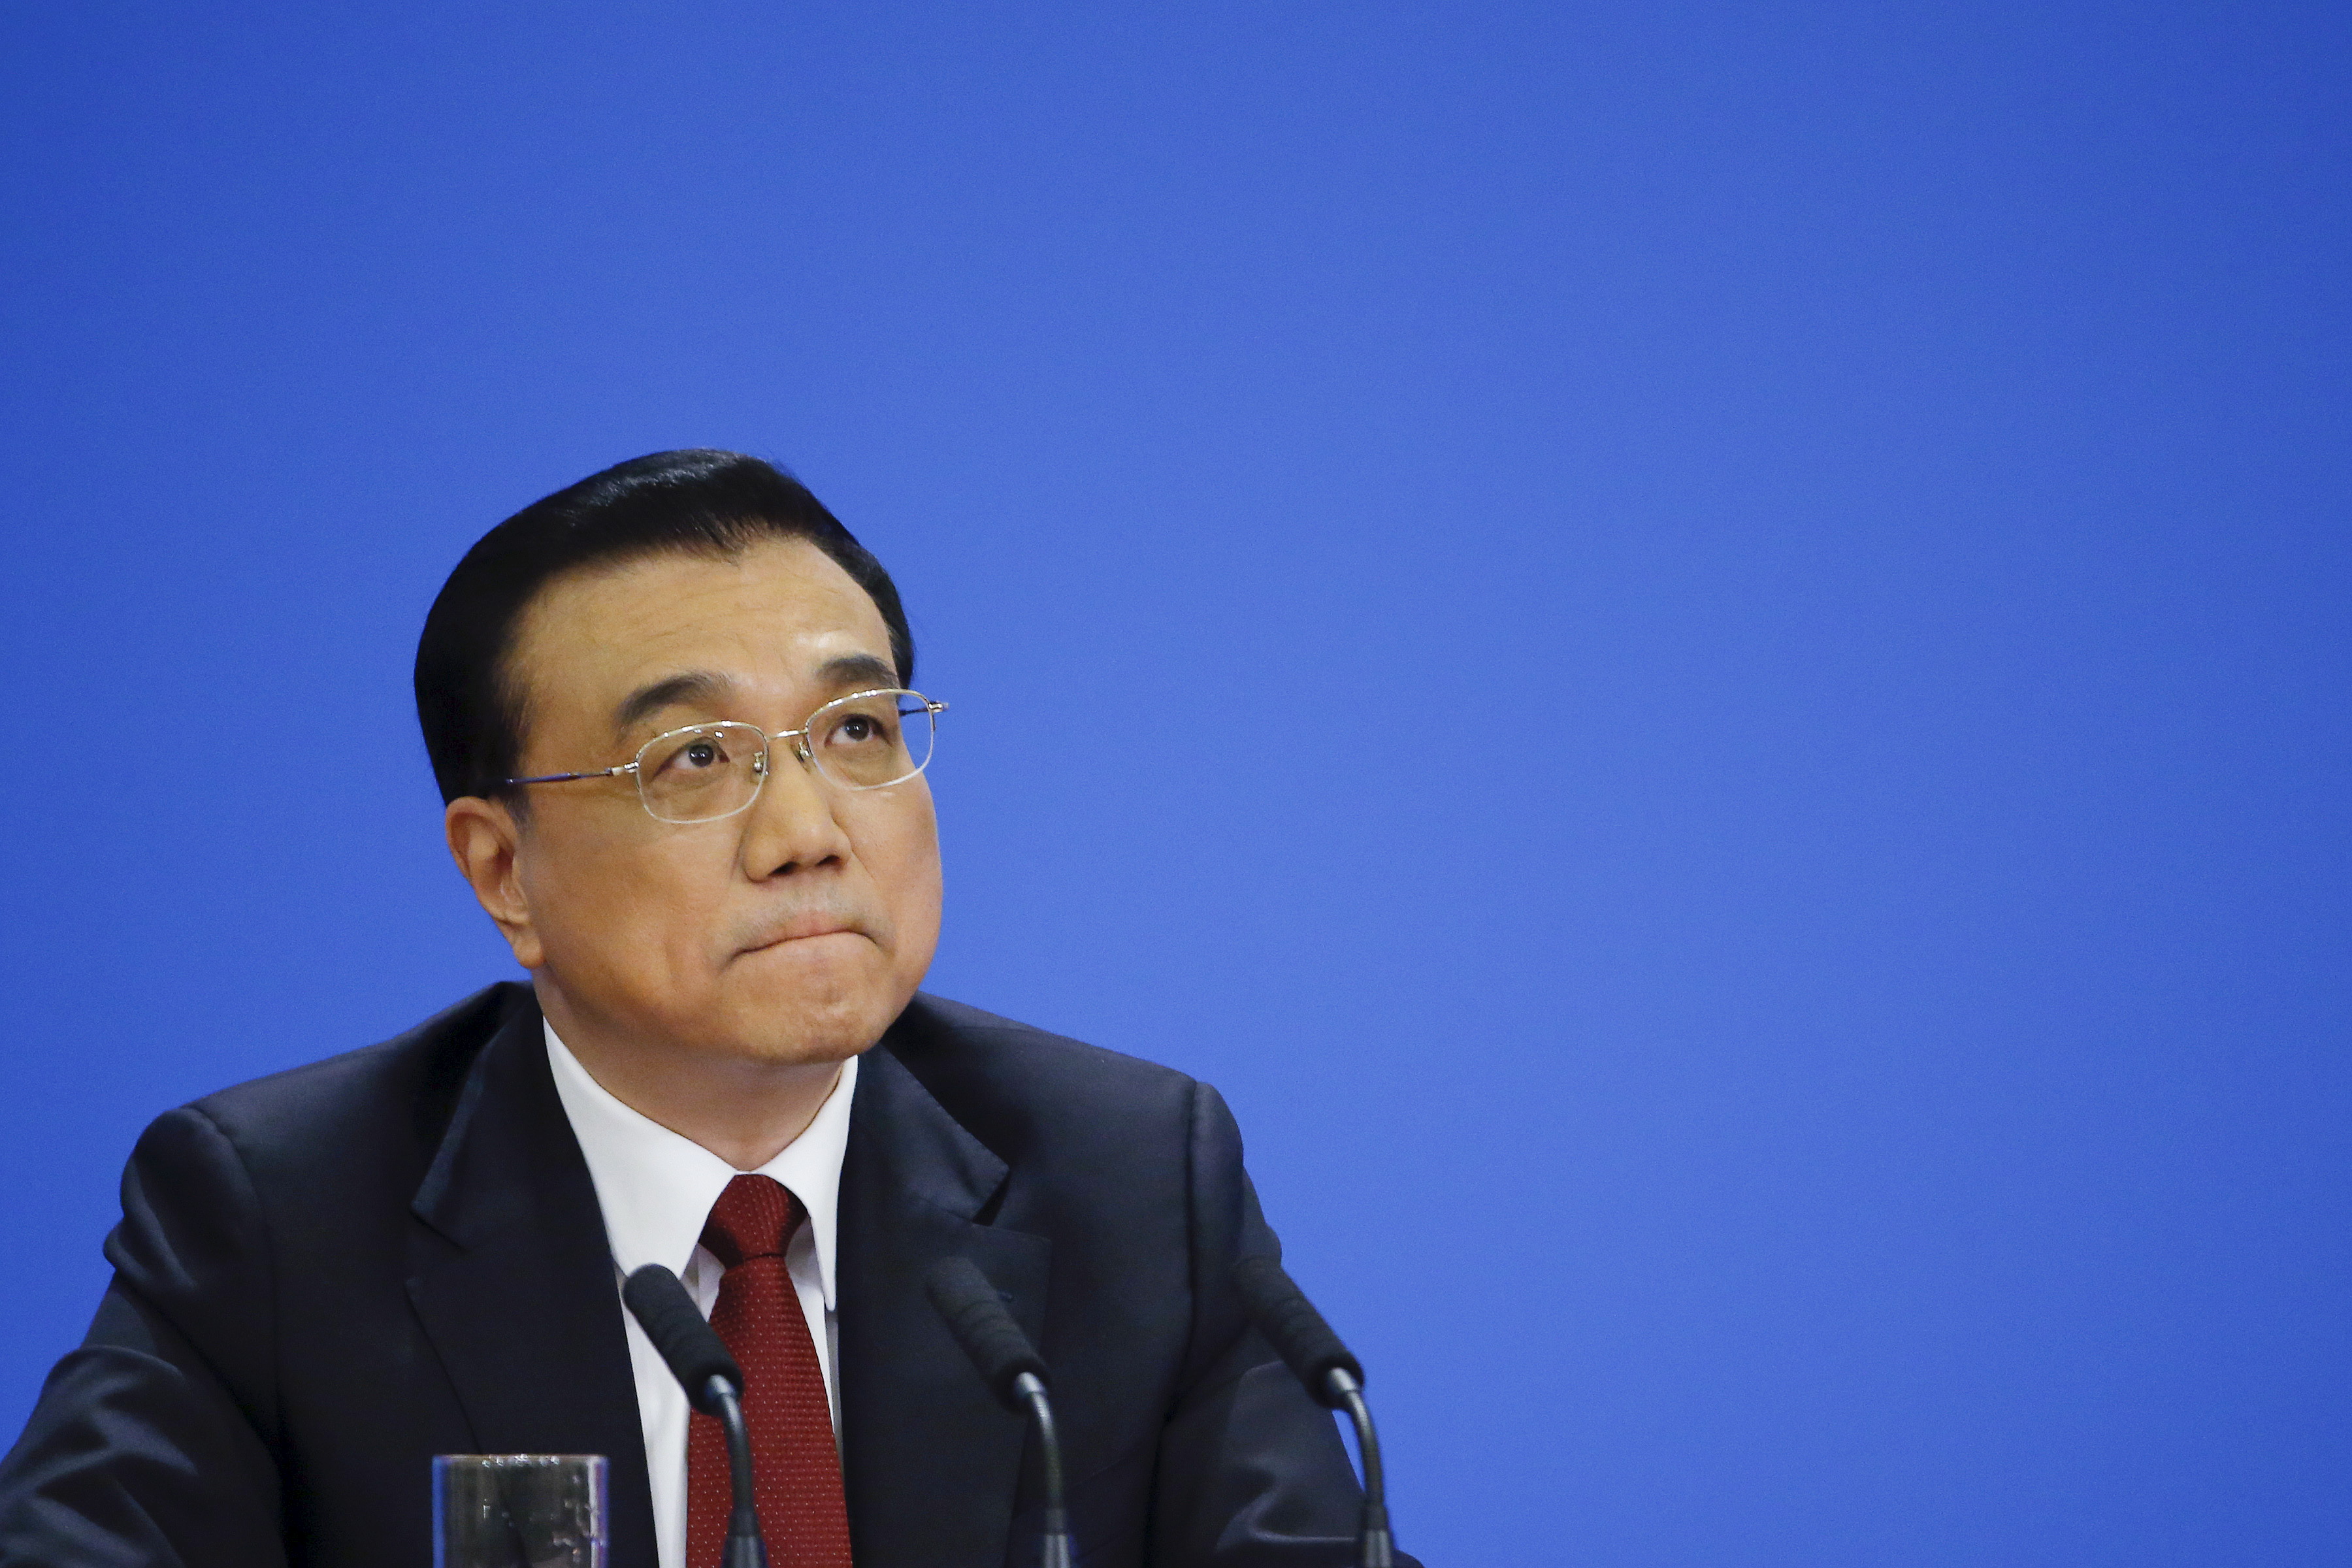 https://img3.s3wfg.com/web/img/images_uploaded/5/0/le-premier-ministre-chinois-li-keqiang.jpg